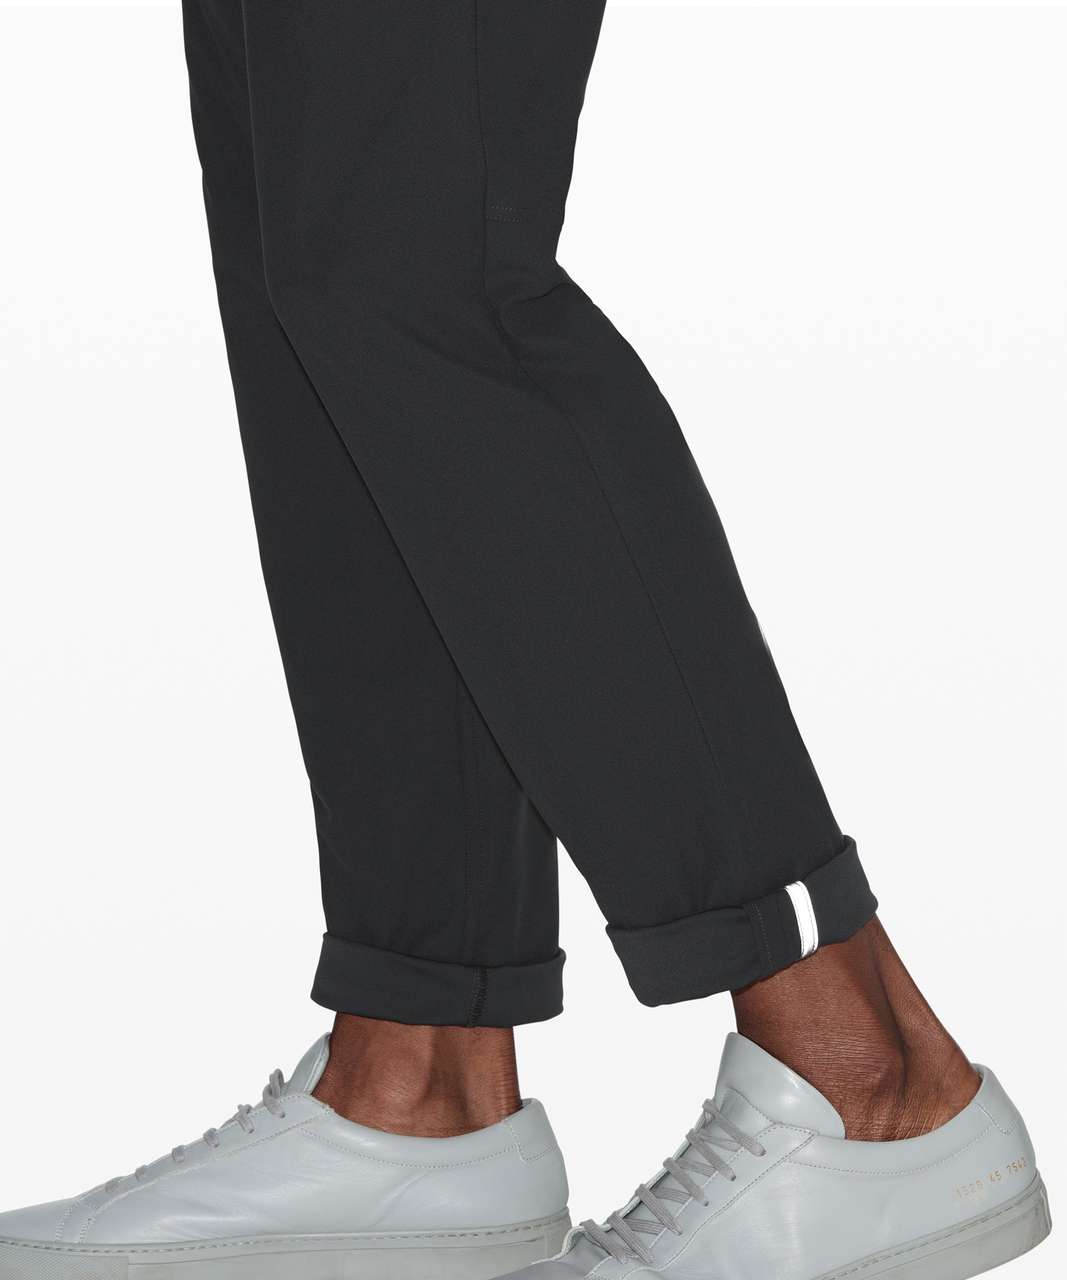 Lululemon ABC pants (slim) - 30x30 - Obsidian color (off gray)